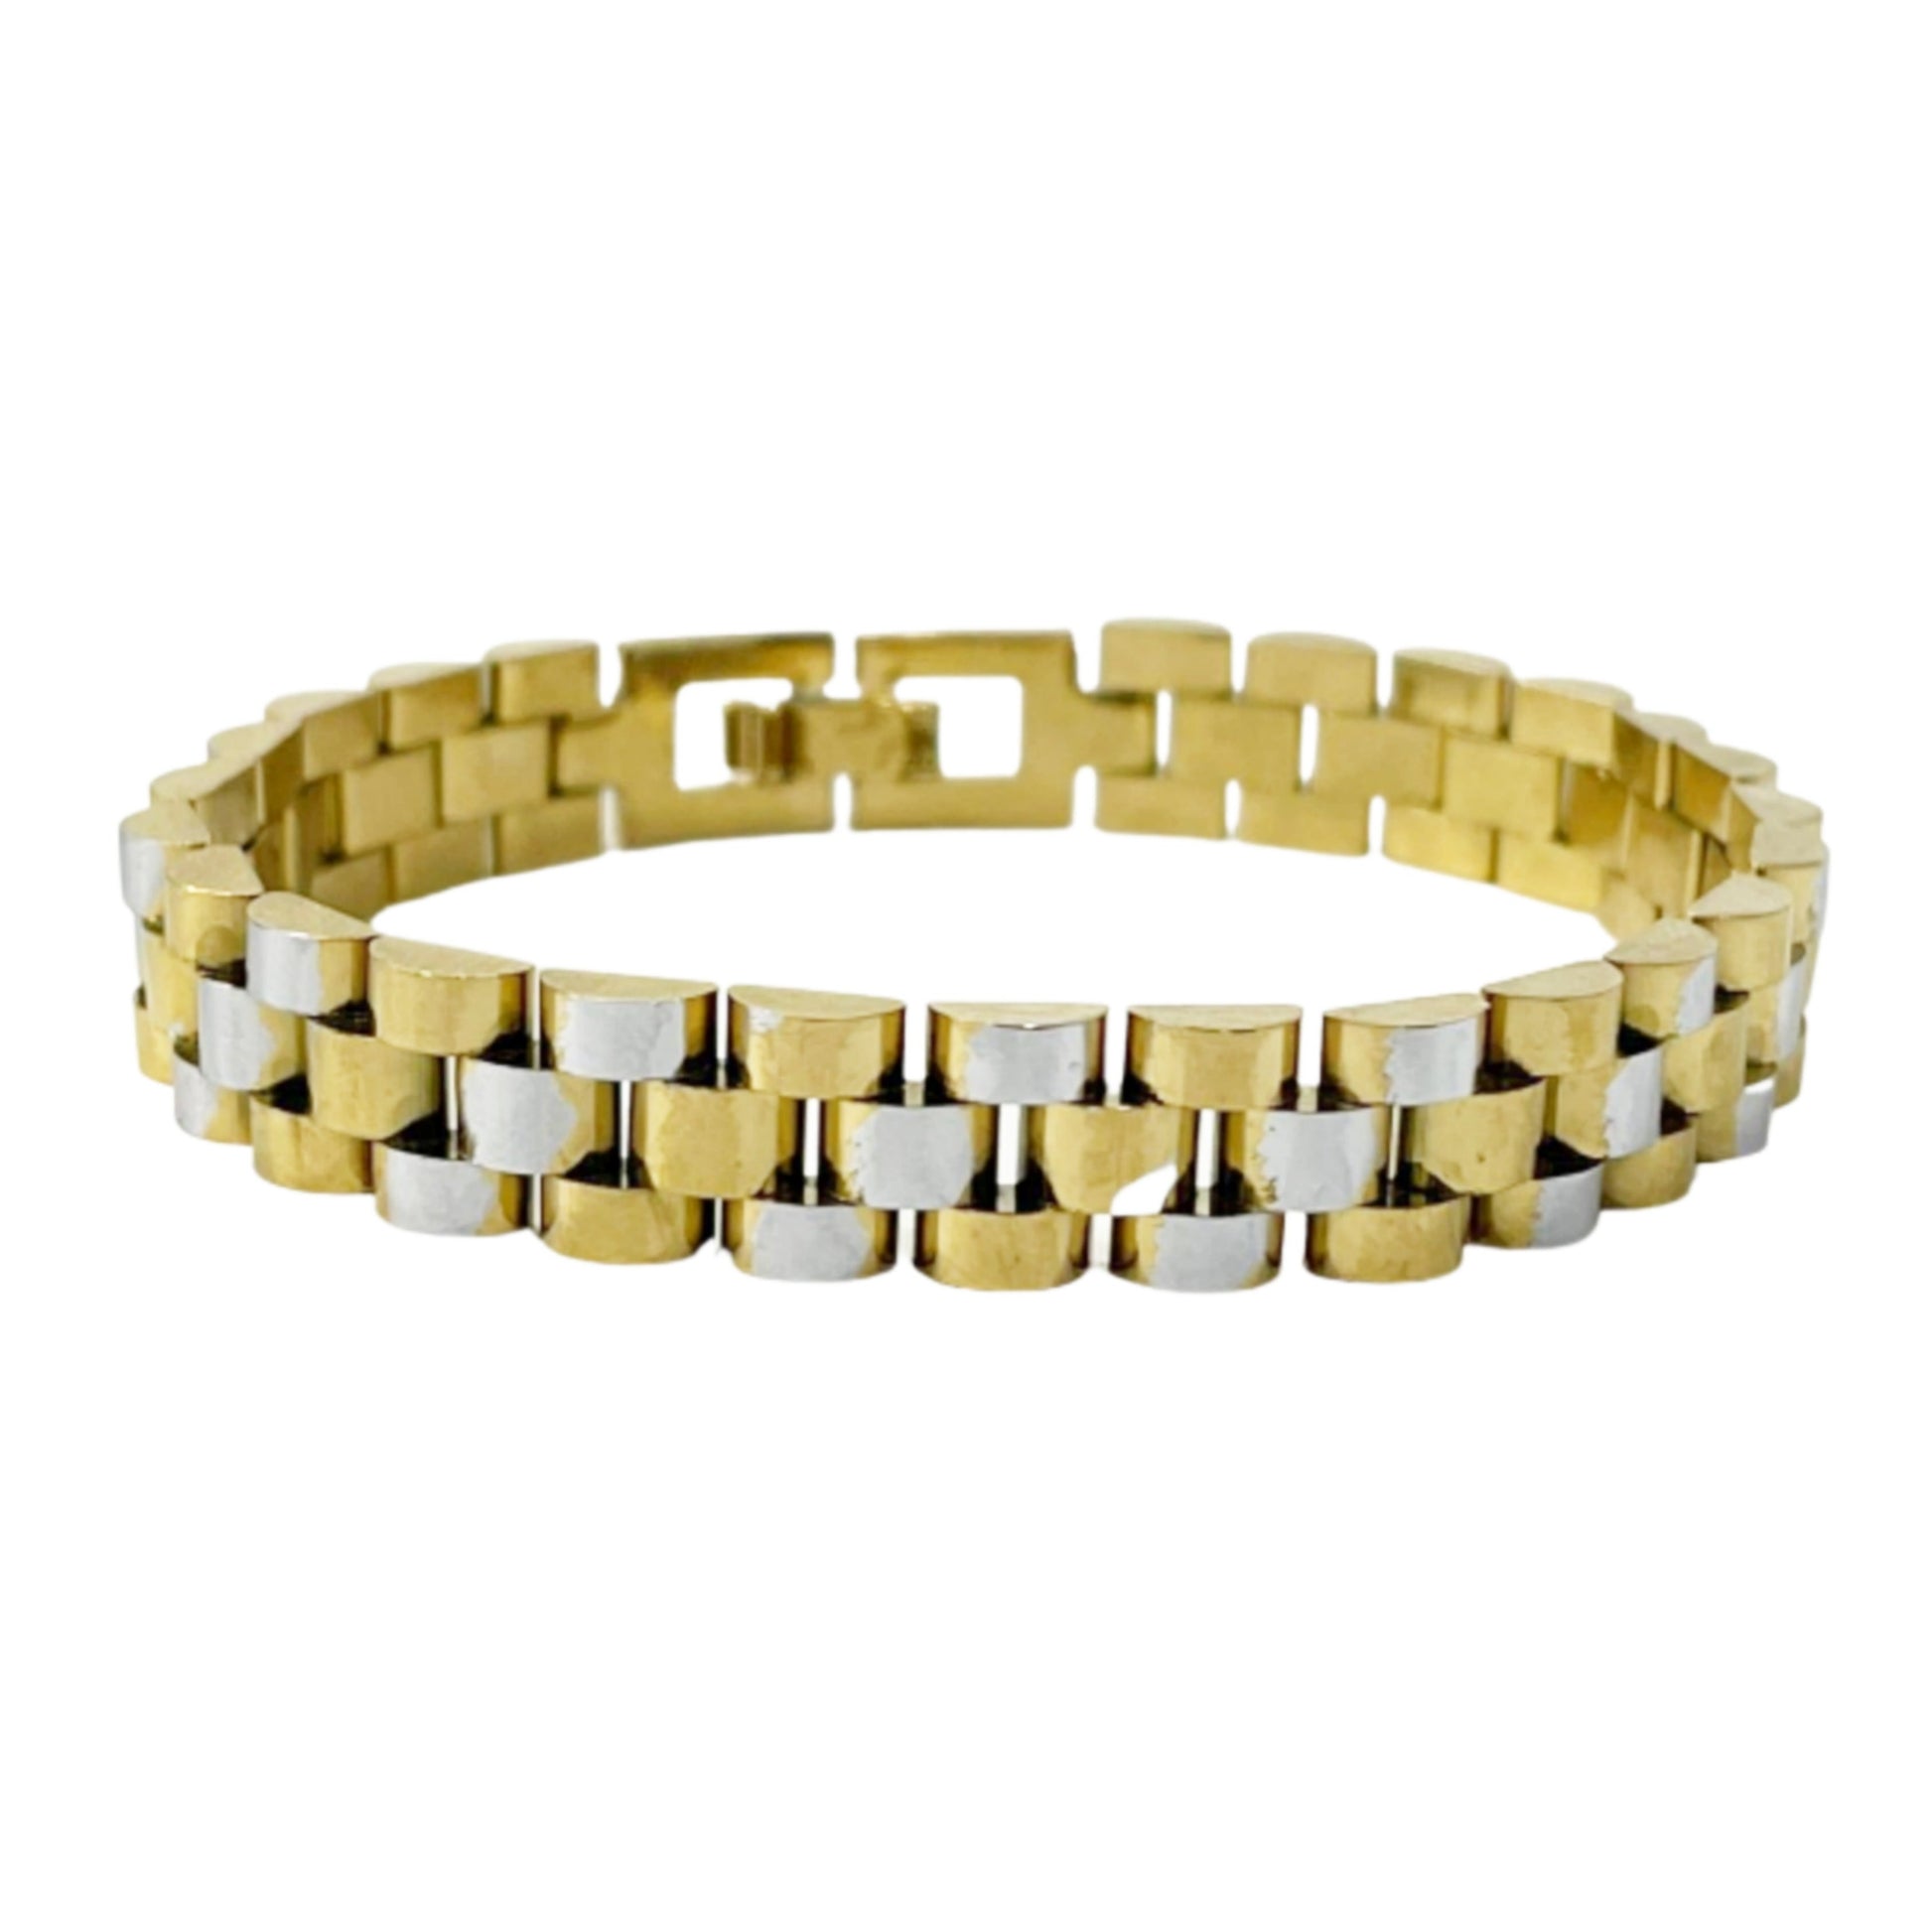 Buy Golden Silver Rolex Bracelet For Men Online In Pakistan